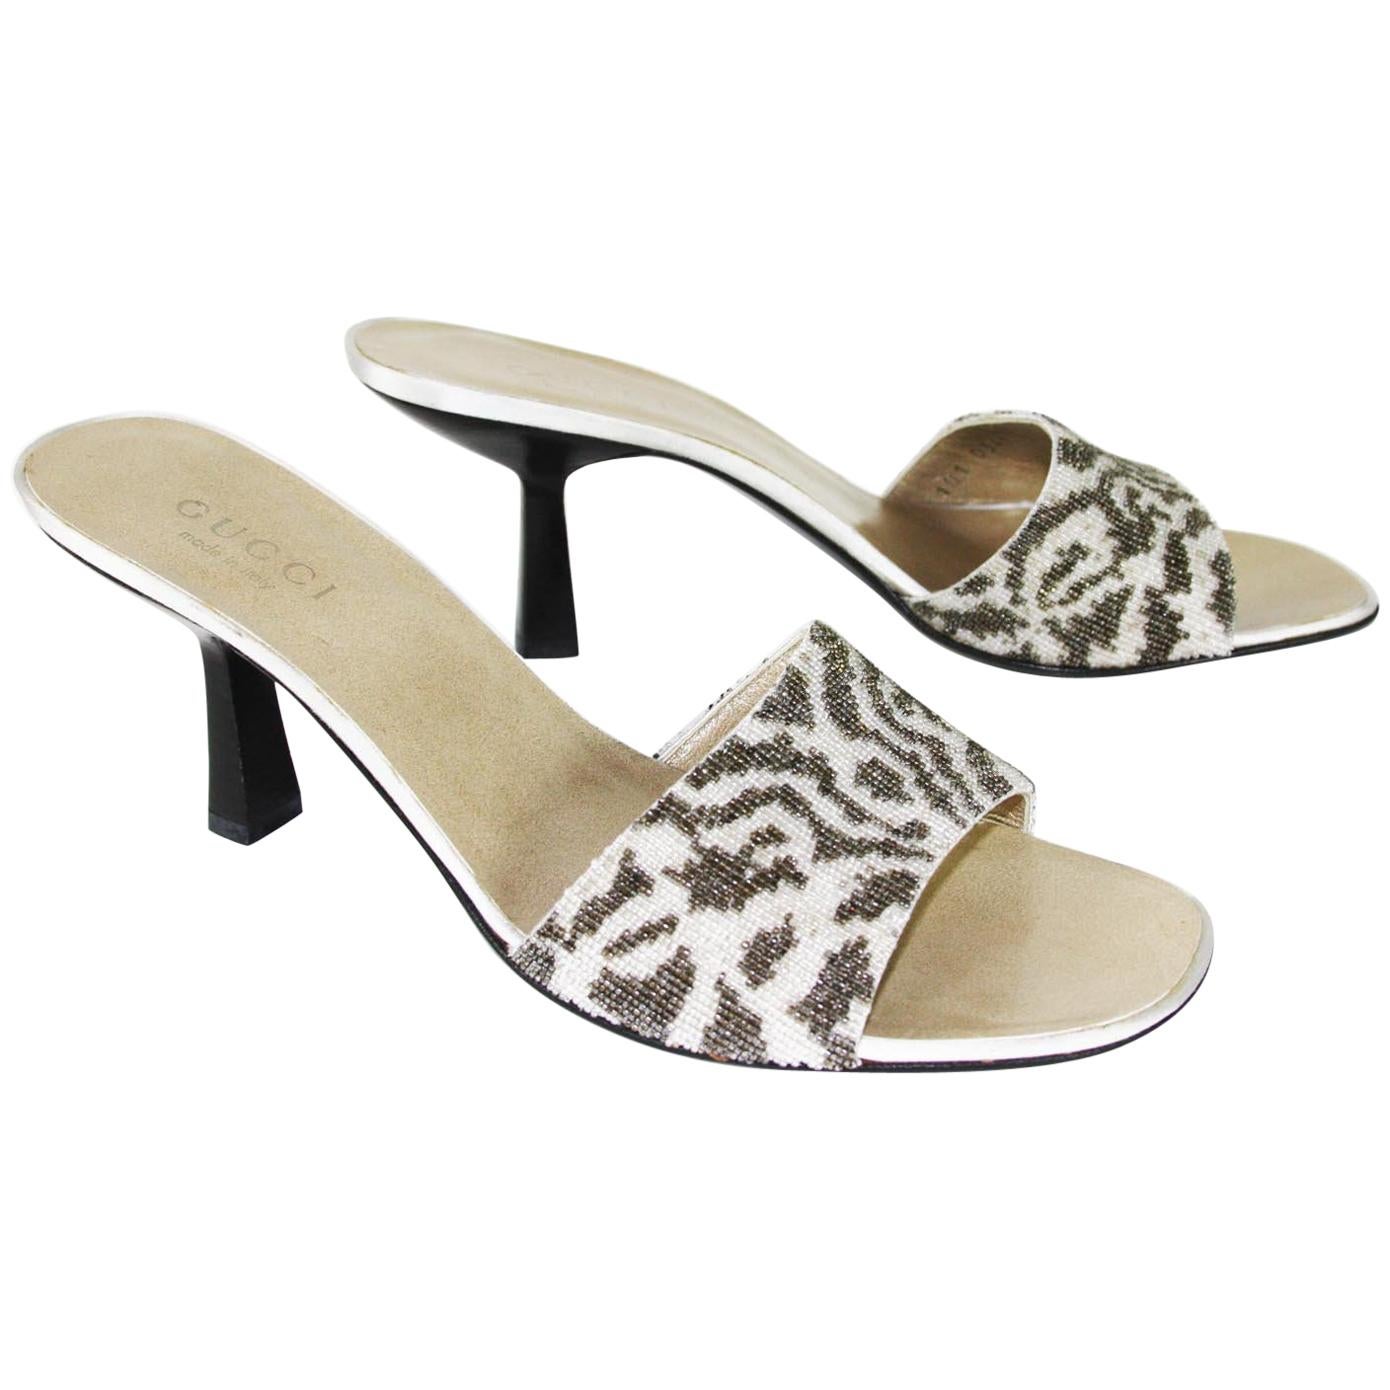 New Tom Ford for Gucci Beaded Animal Print Shoes Slides US 9 B - Eur. 39 B